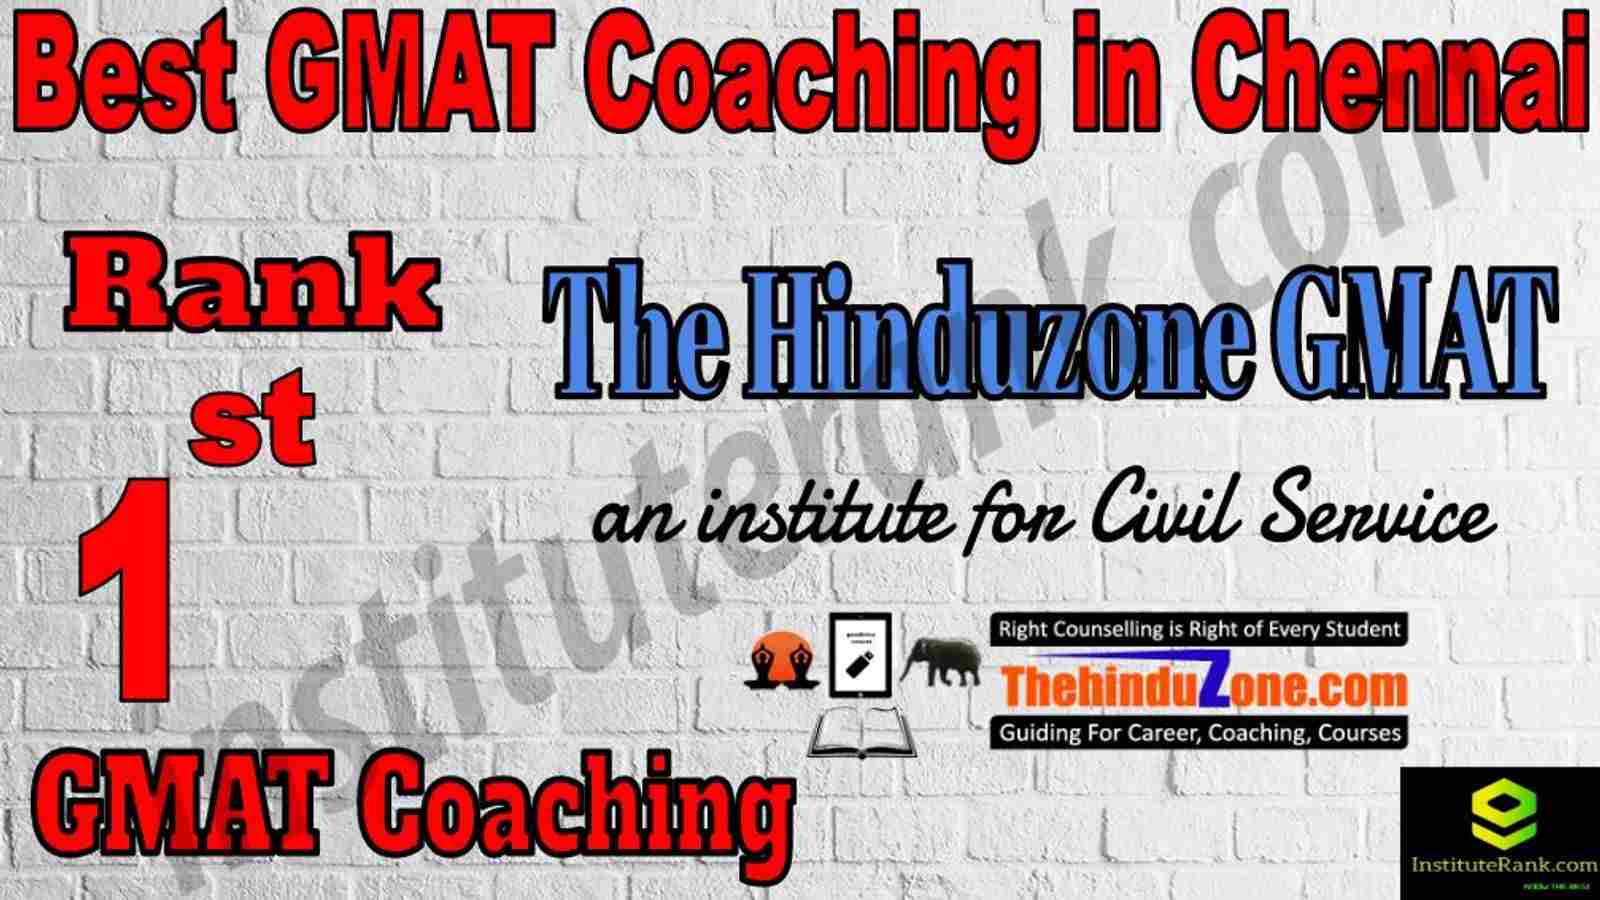 1st Best GMAT Coaching in Chennai